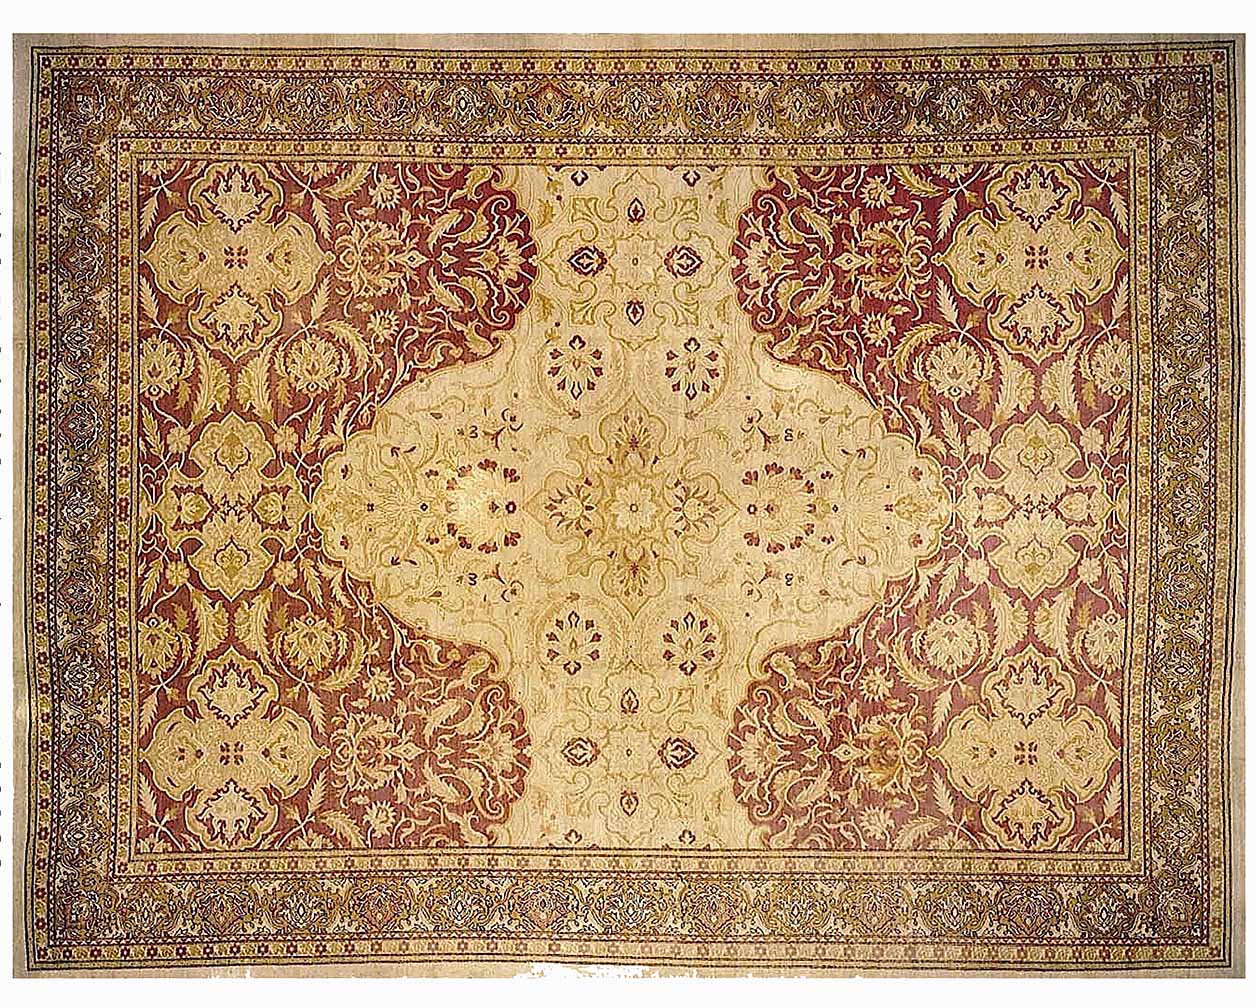 Antique amritsar Carpet - # 54474